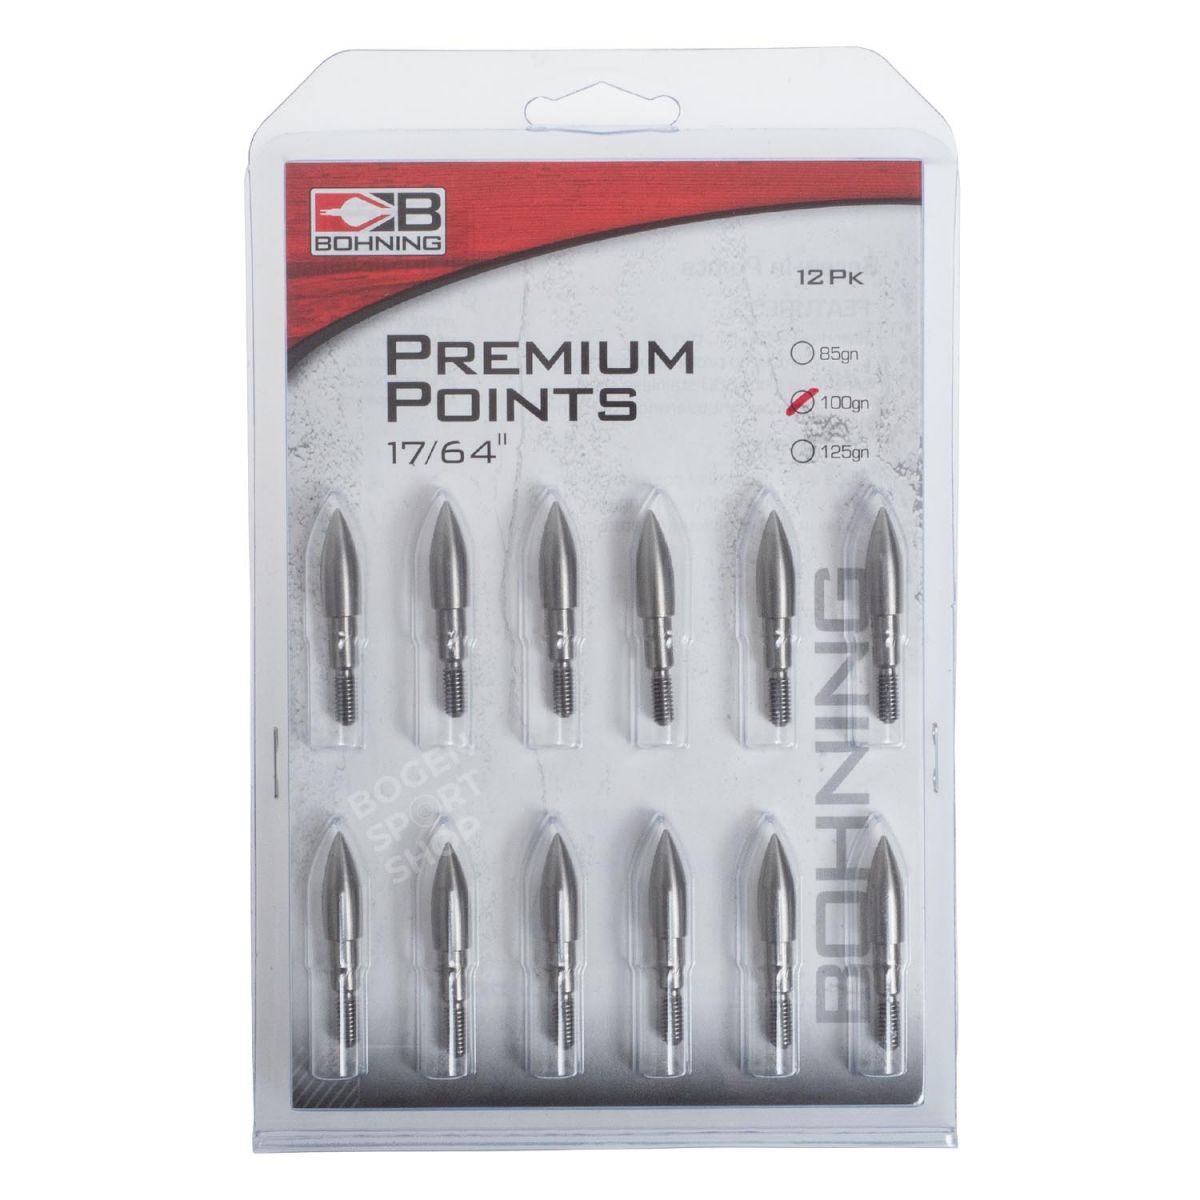 Bohning Premium Screw-In Points Bullet (12 Pcs.)